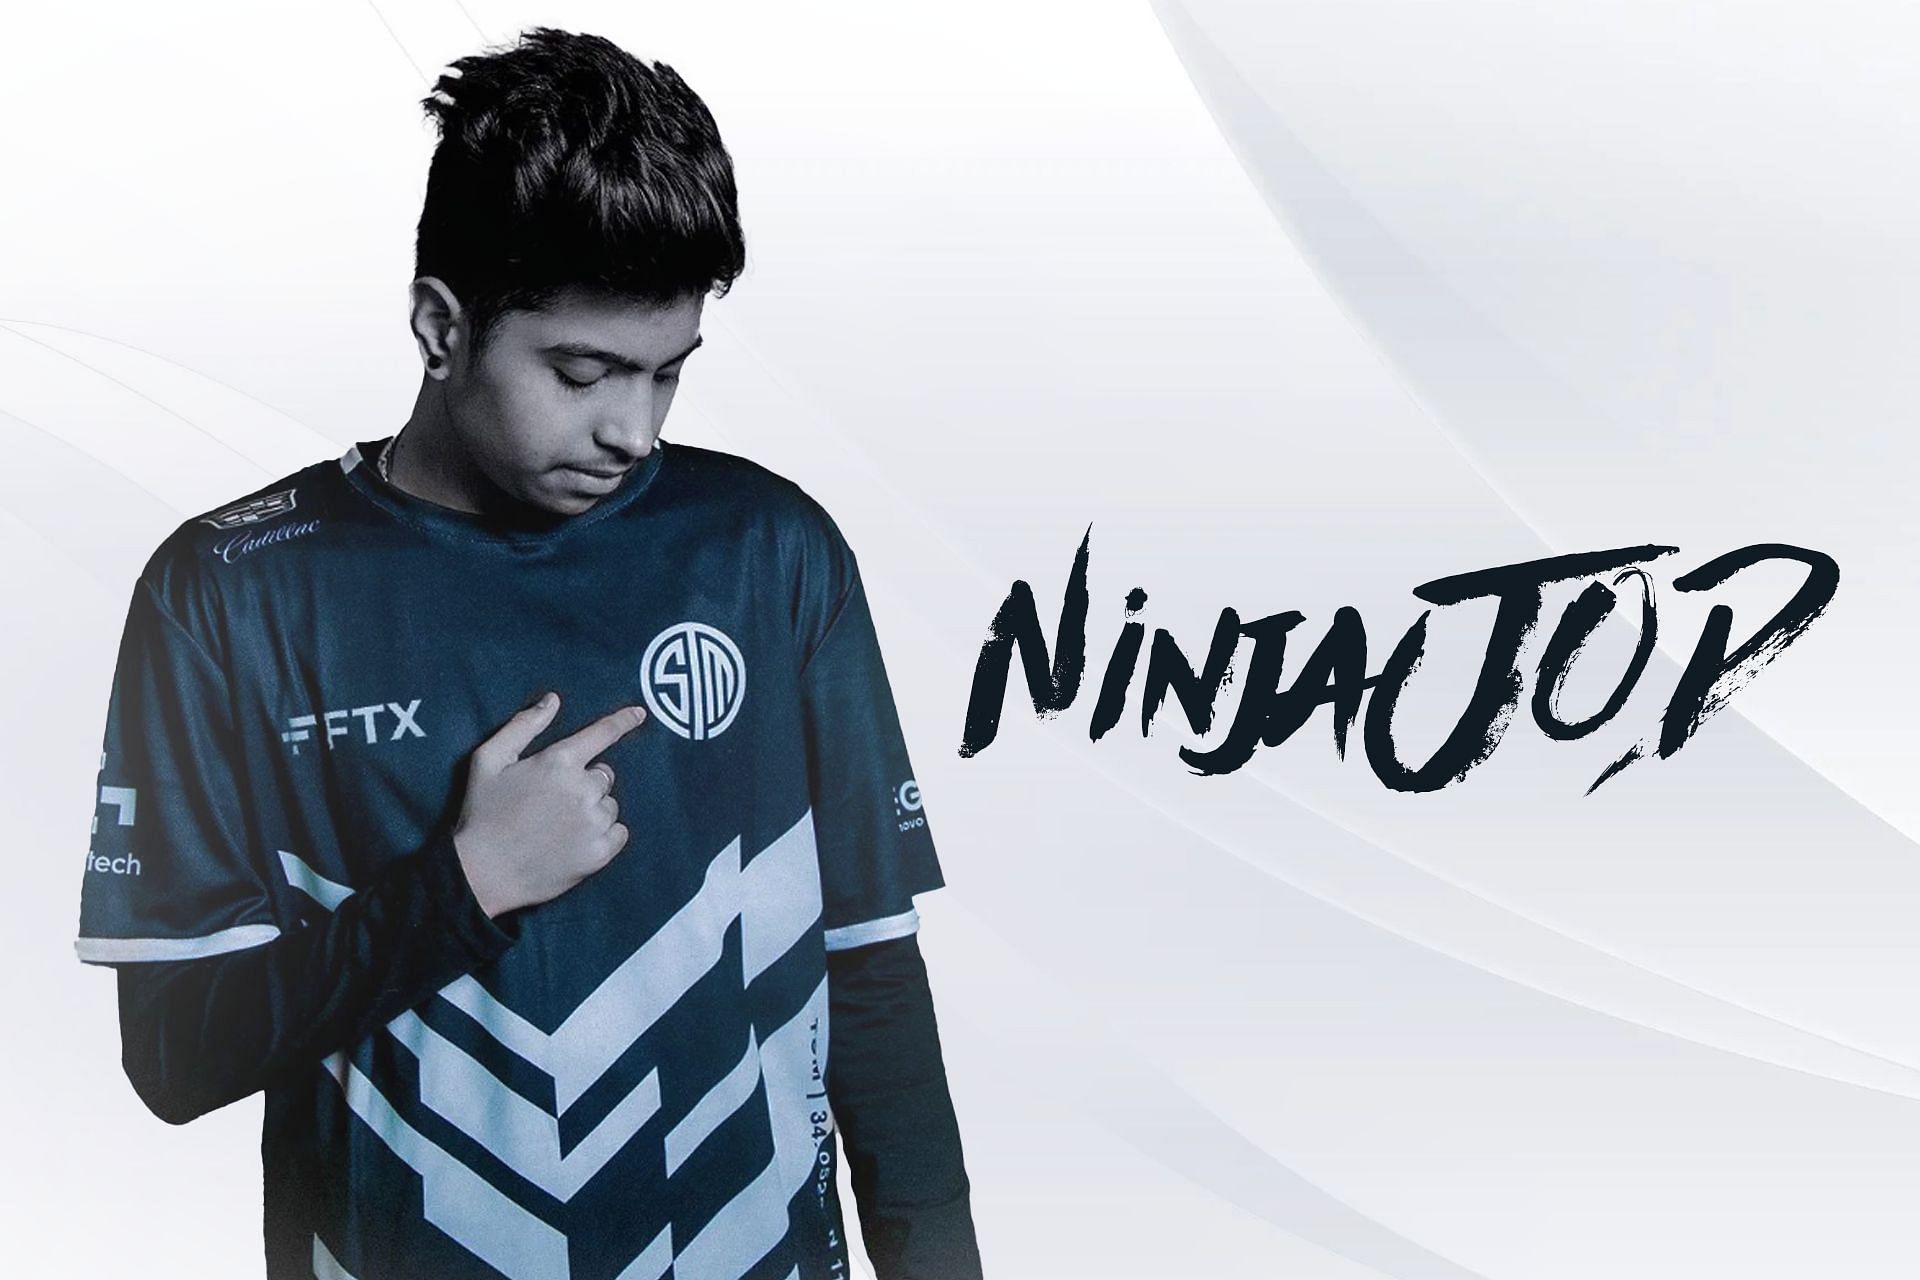 NinjaJOD is one of the best young BGMI esports players (Image via Sportskeeda)